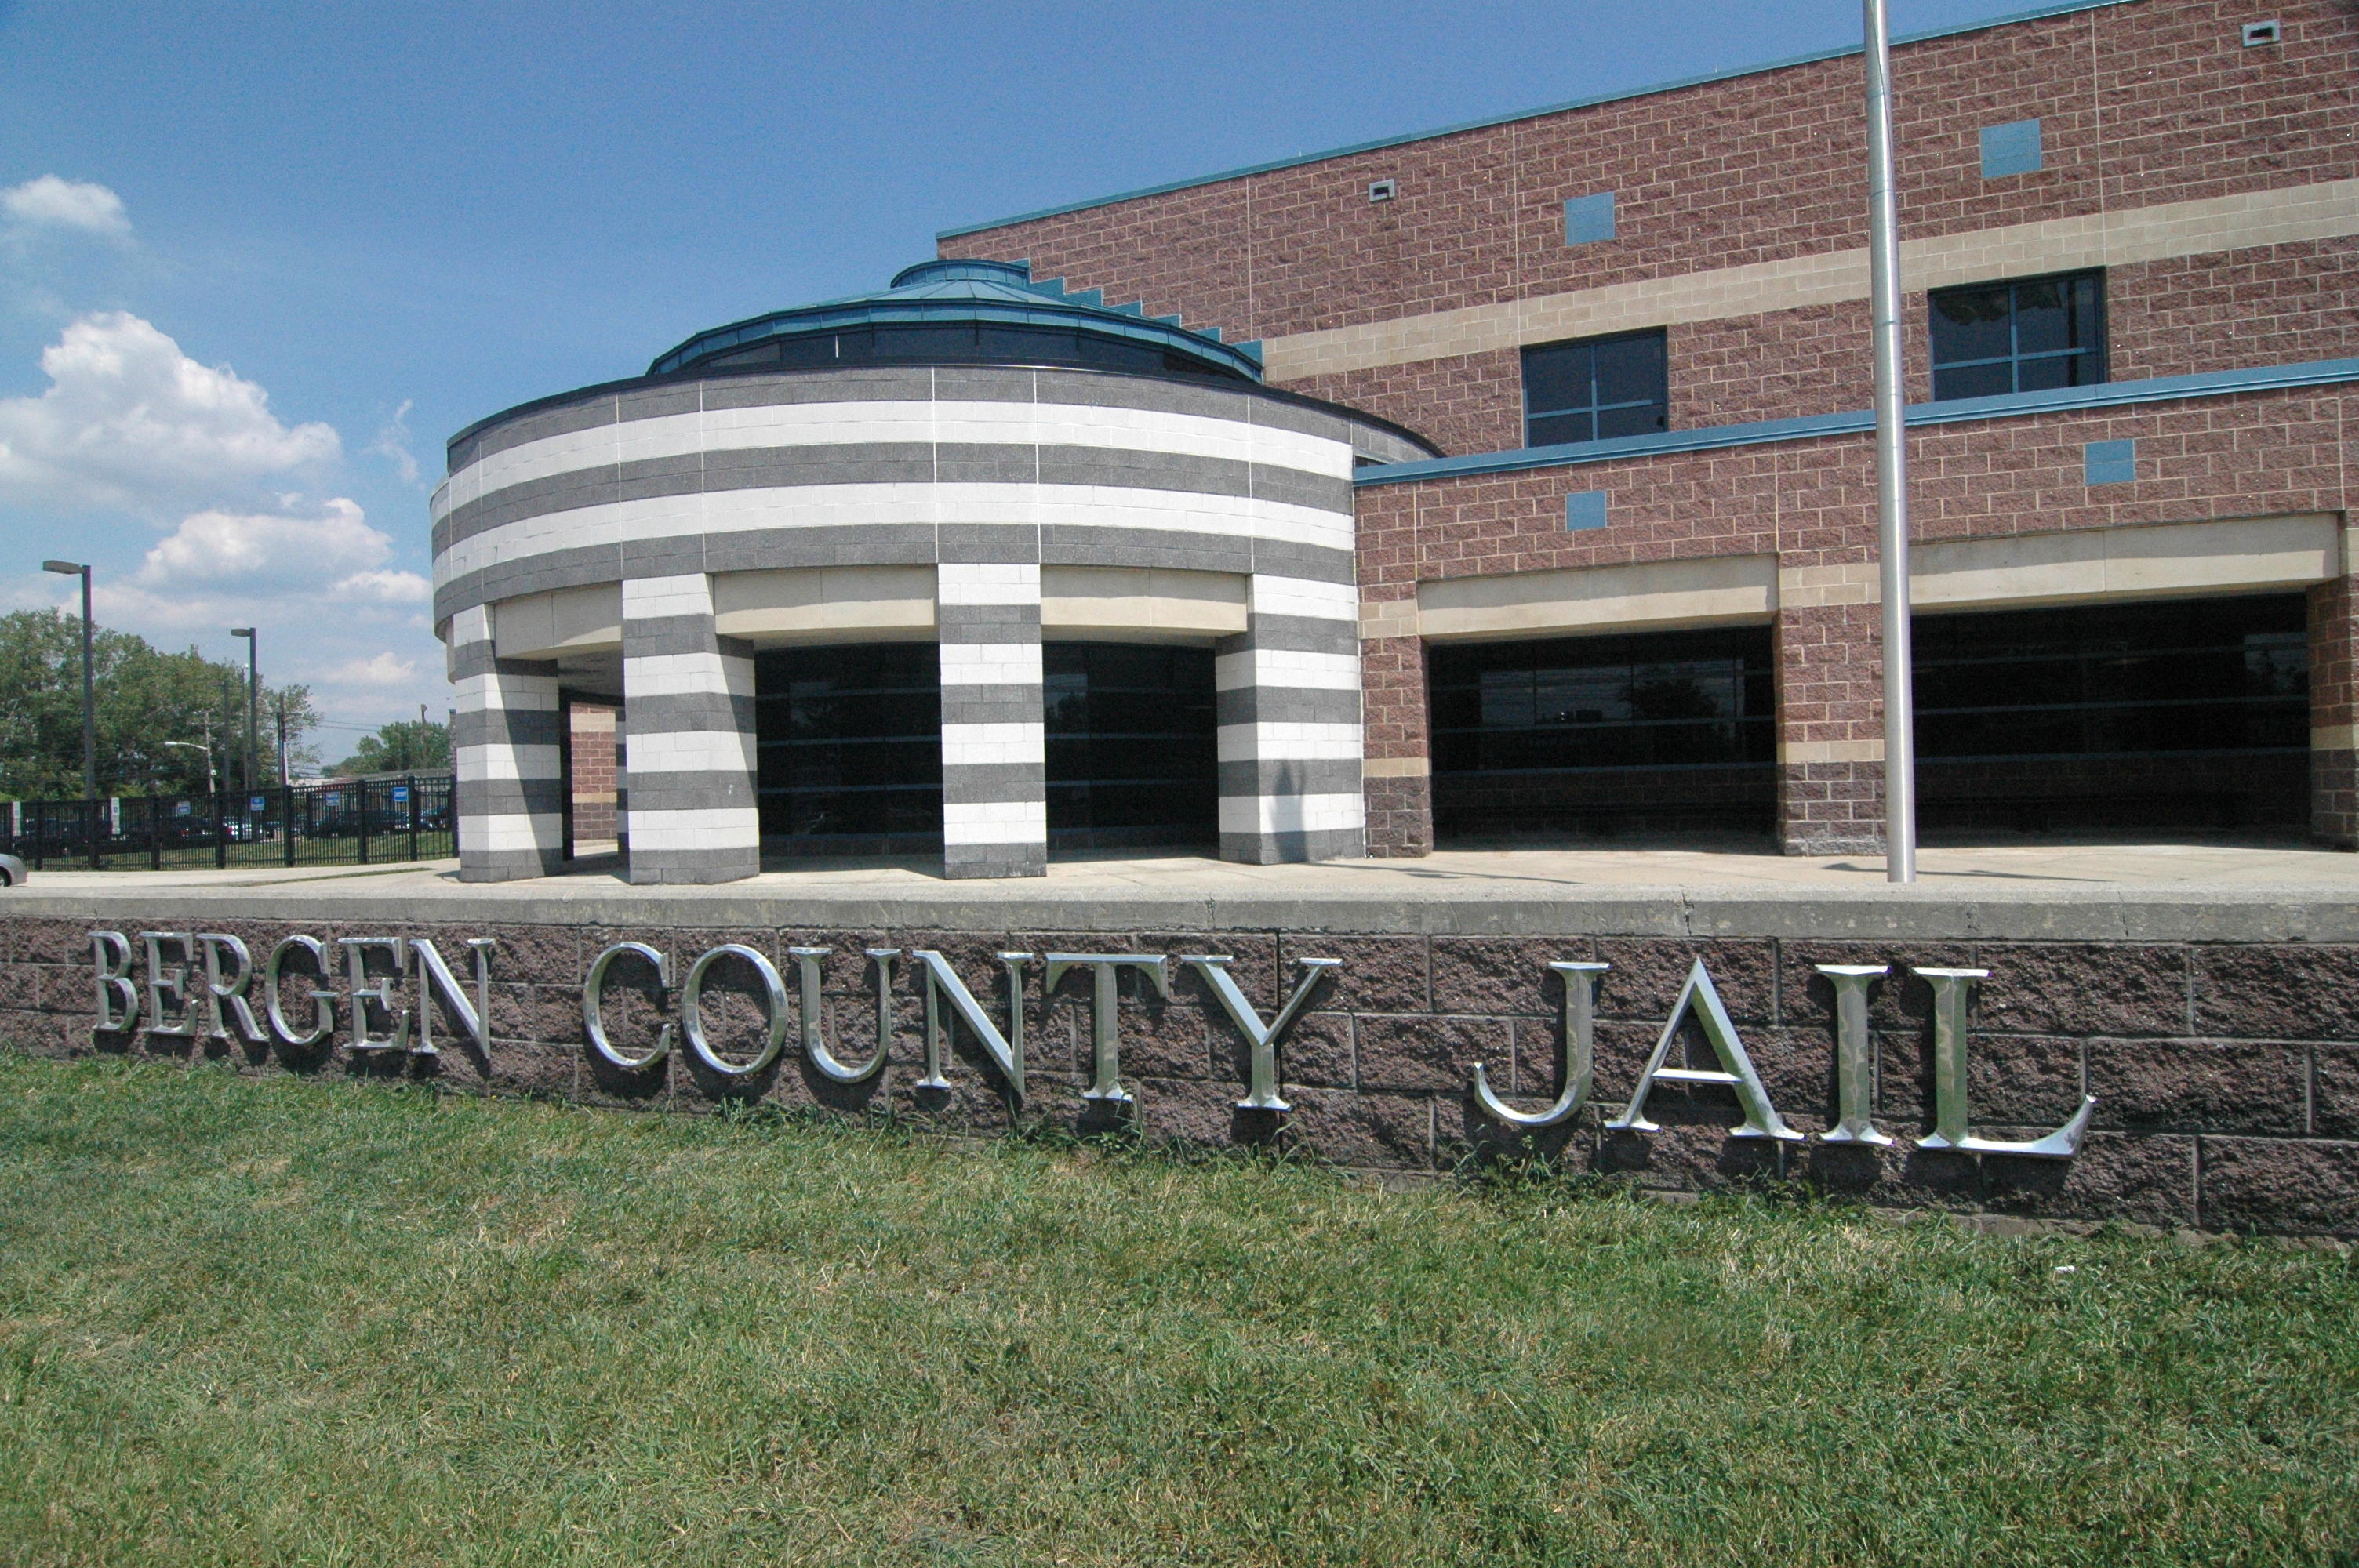 county jail